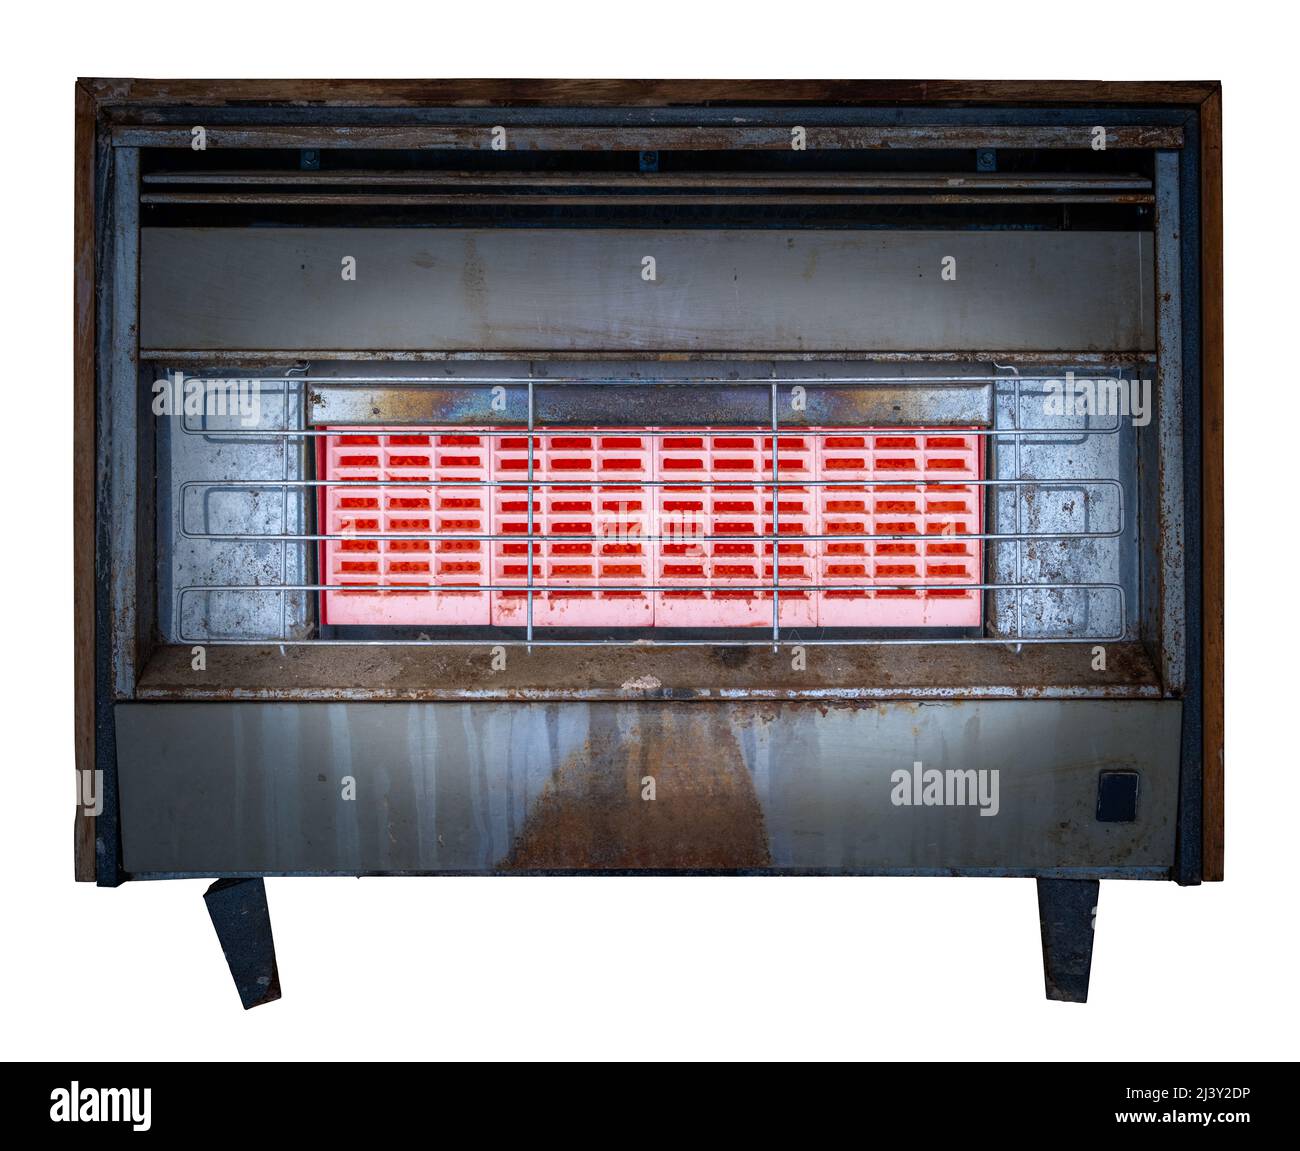 Vidrio Grungy aislado Fuego de gas interior antiguo o radiador o calentador mientras está encendido Foto de stock